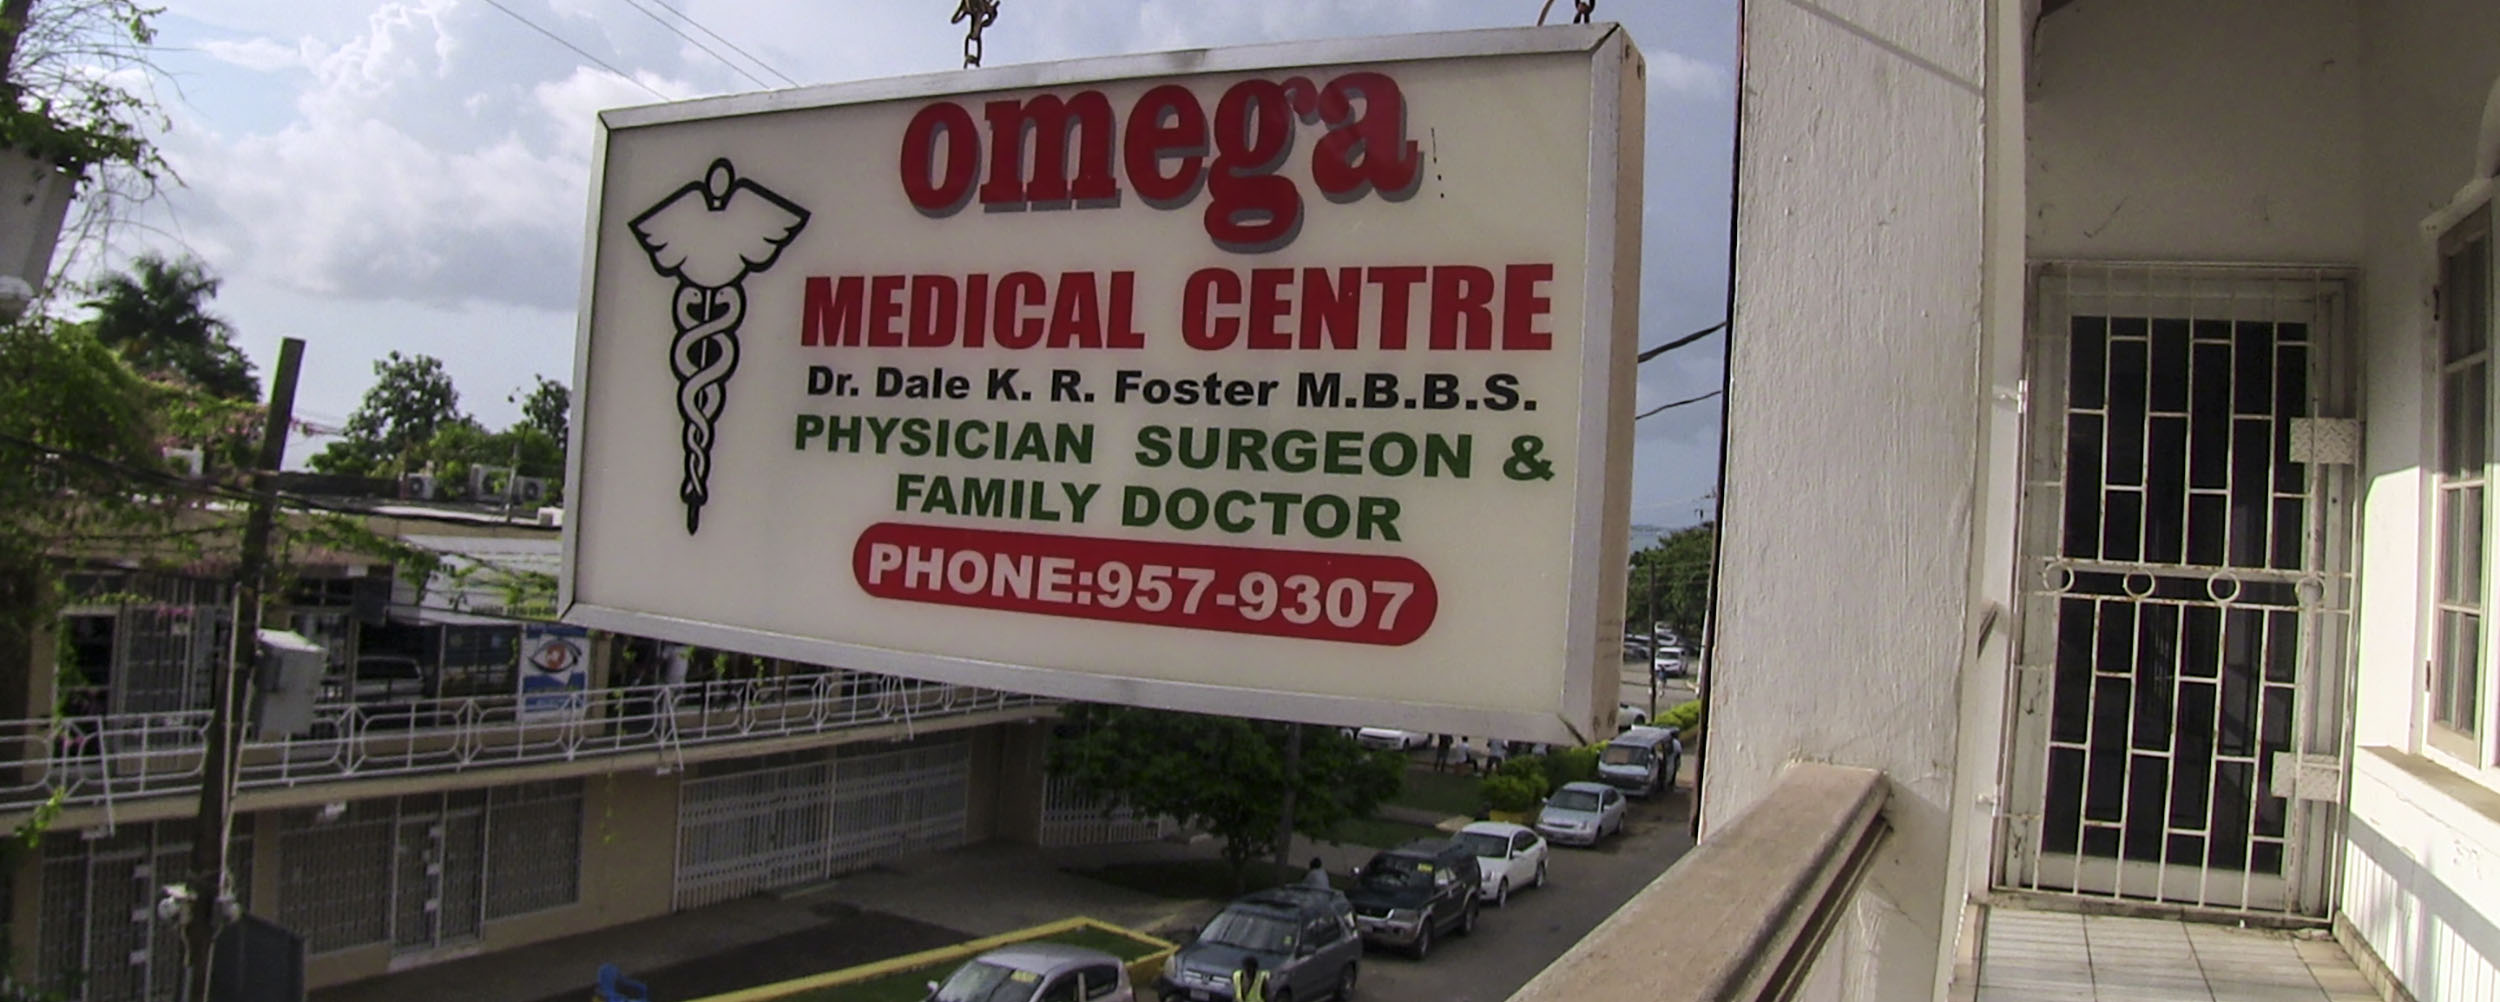 Omega Medical Centre - Negril Center - Negril Jamaica